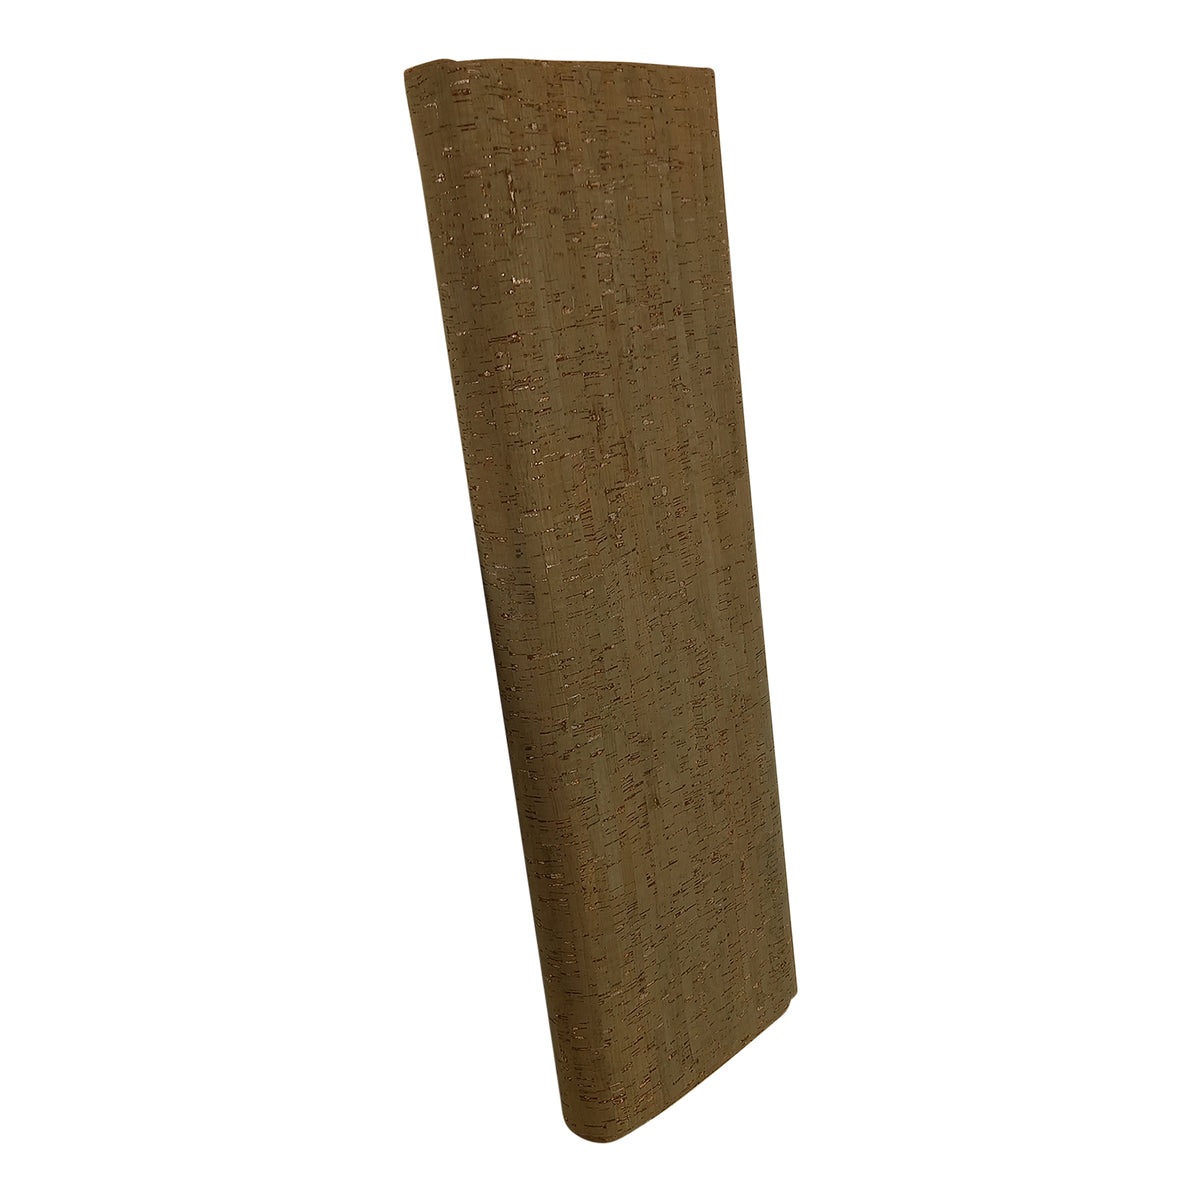 Belagio Cork Fabric Plain Taupe, Medium Weight Cork Fabric